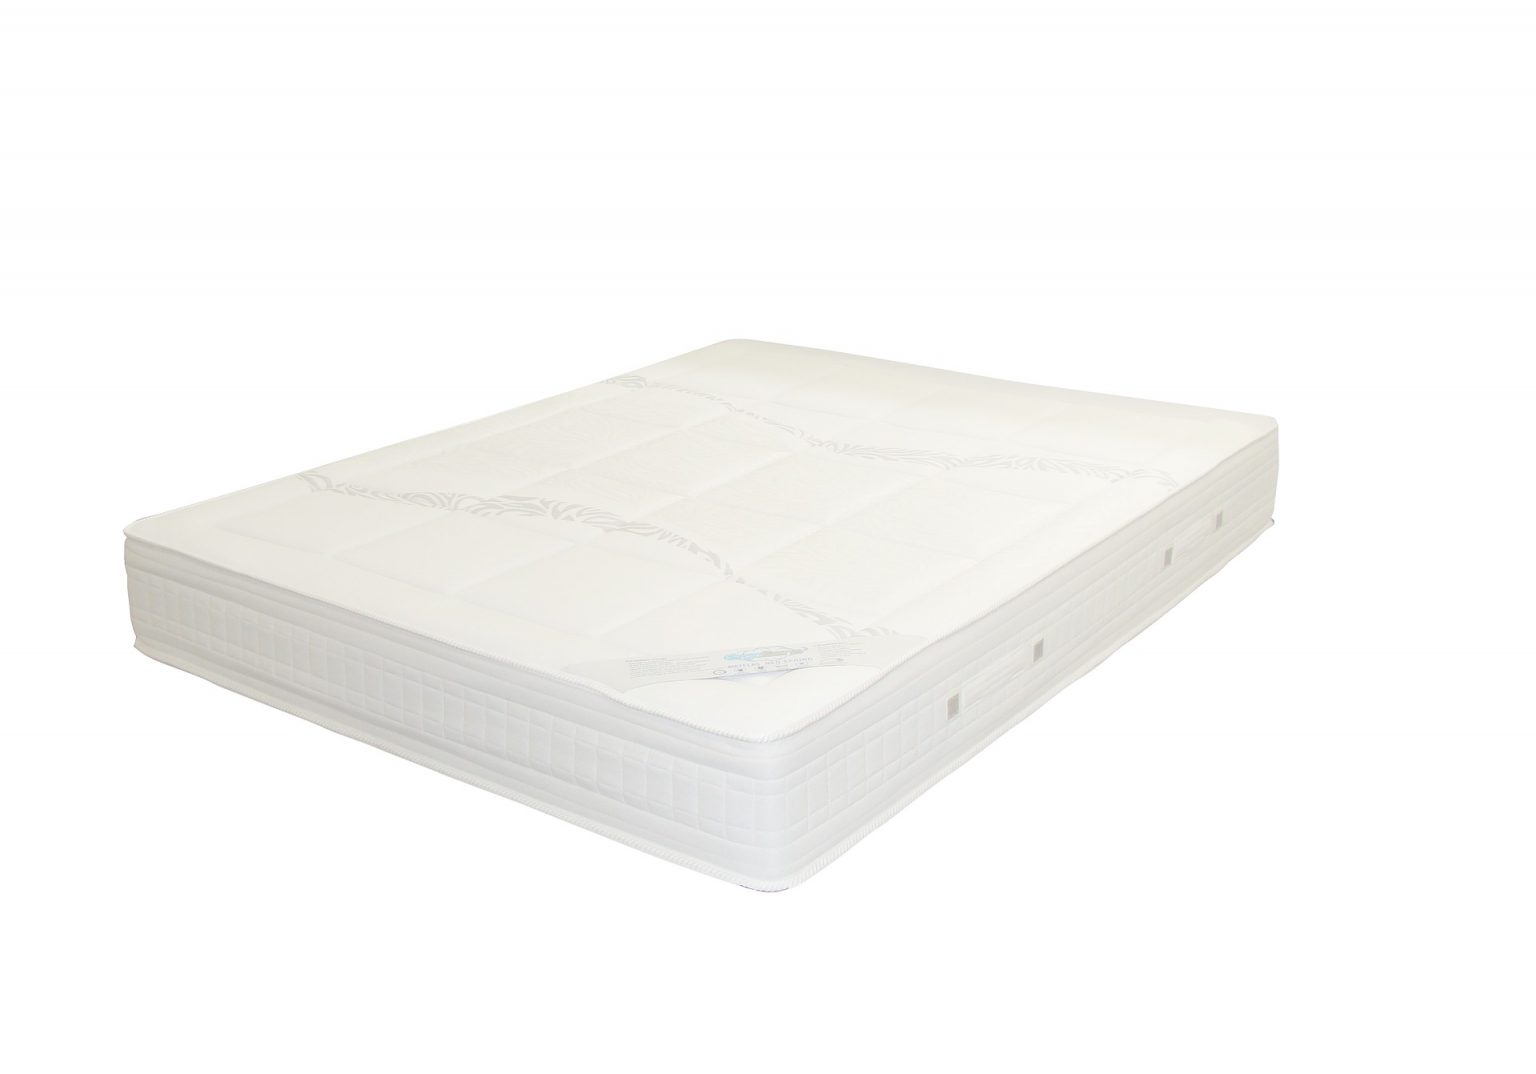 mattress protector price in kenya